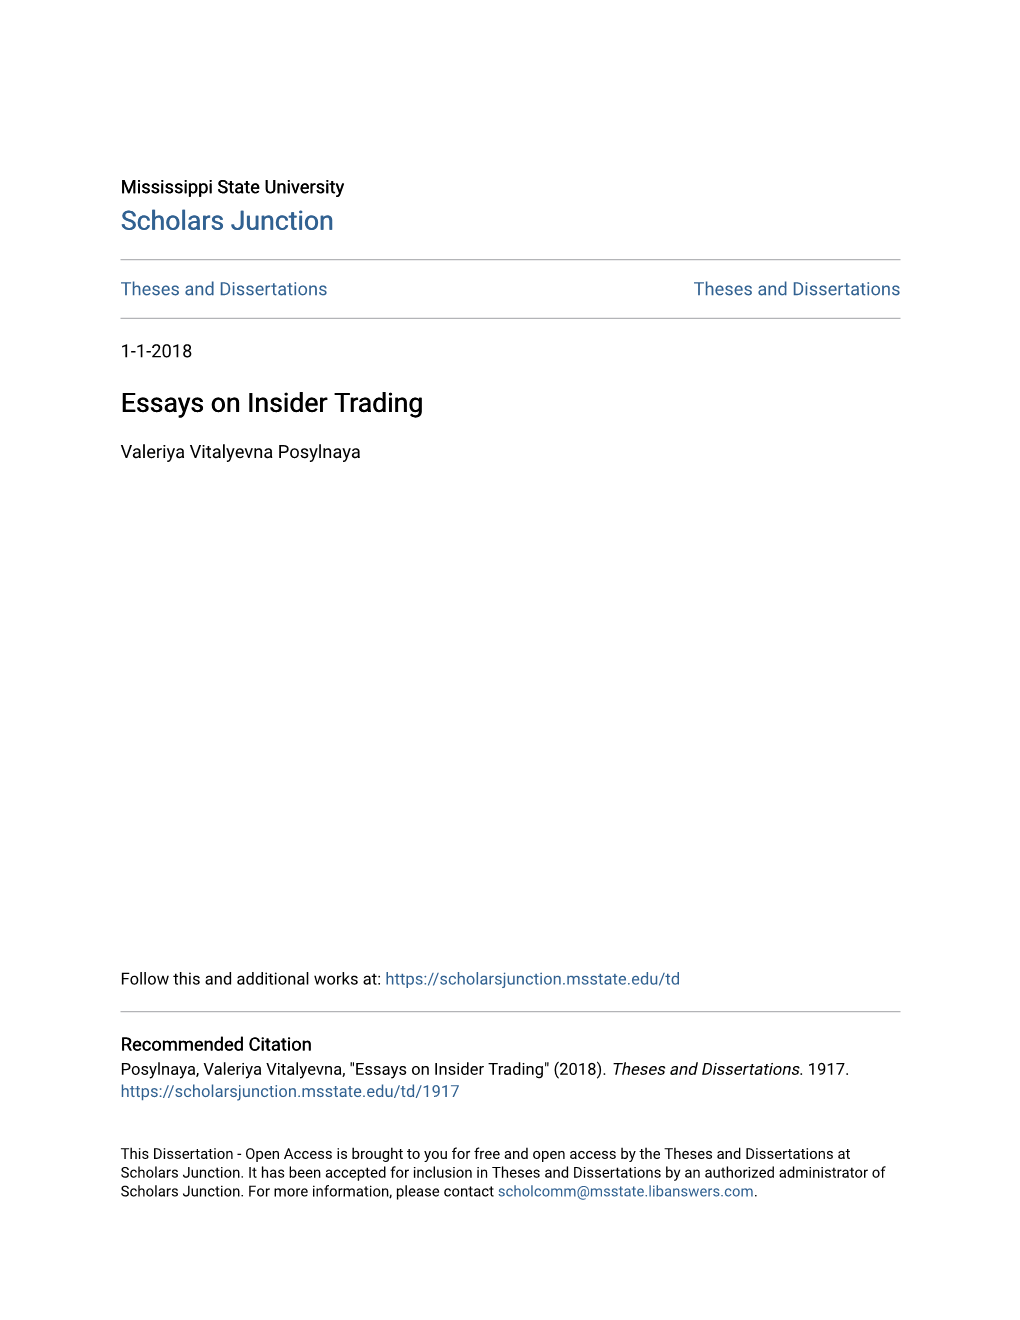 Essays on Insider Trading